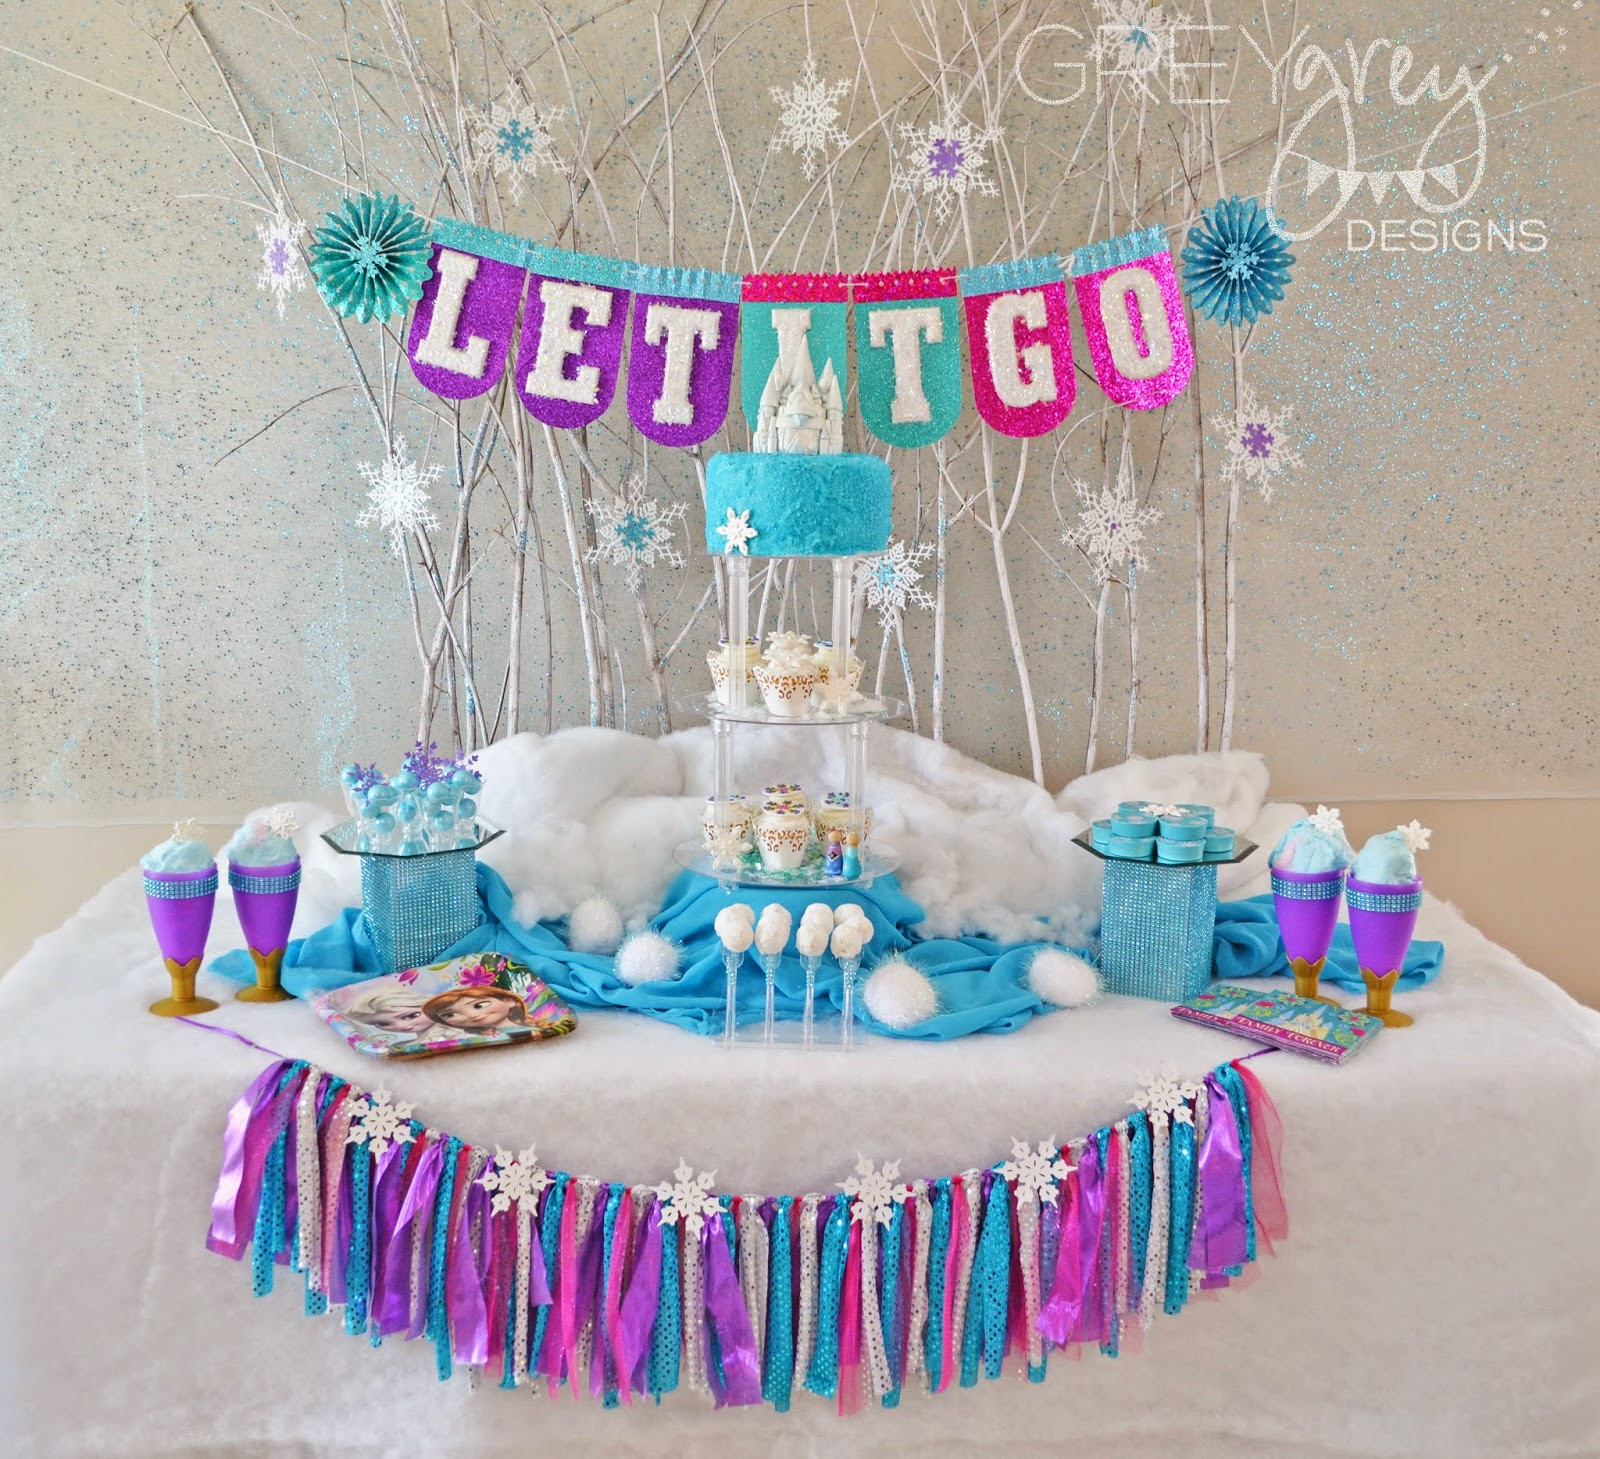 Frozen Birthday Party Decorations
 GreyGrey Designs Giveaway Frozen Birthday Party Pack for